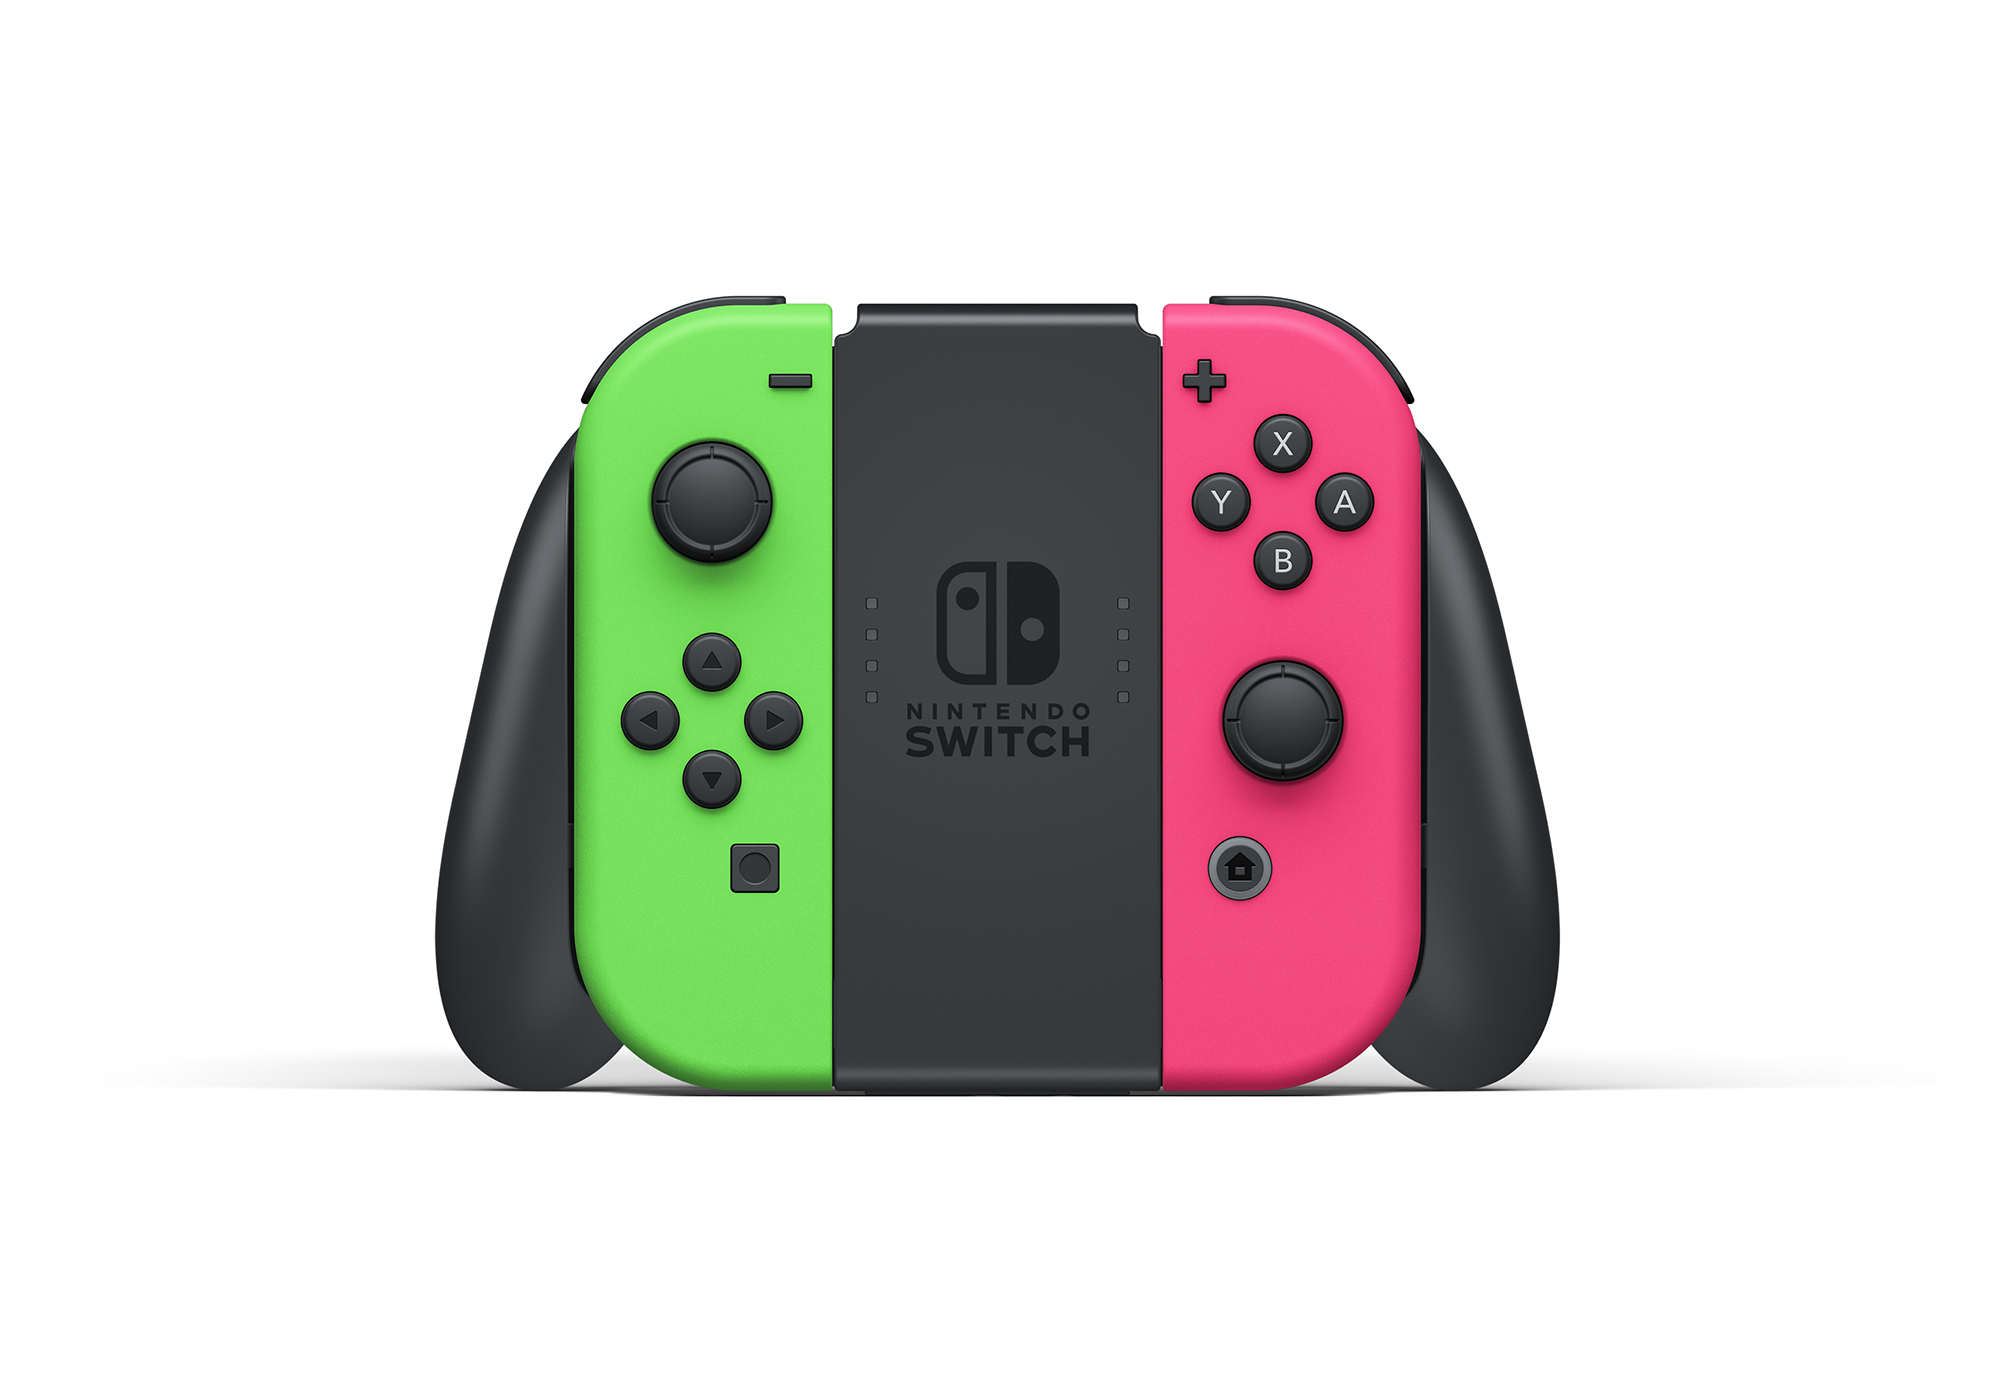 Nintendo Switch Hardware with Splatoon 2 + Neon Green/Neon Pink Joy-Cons (Nintendo Switch) - image 4 of 11